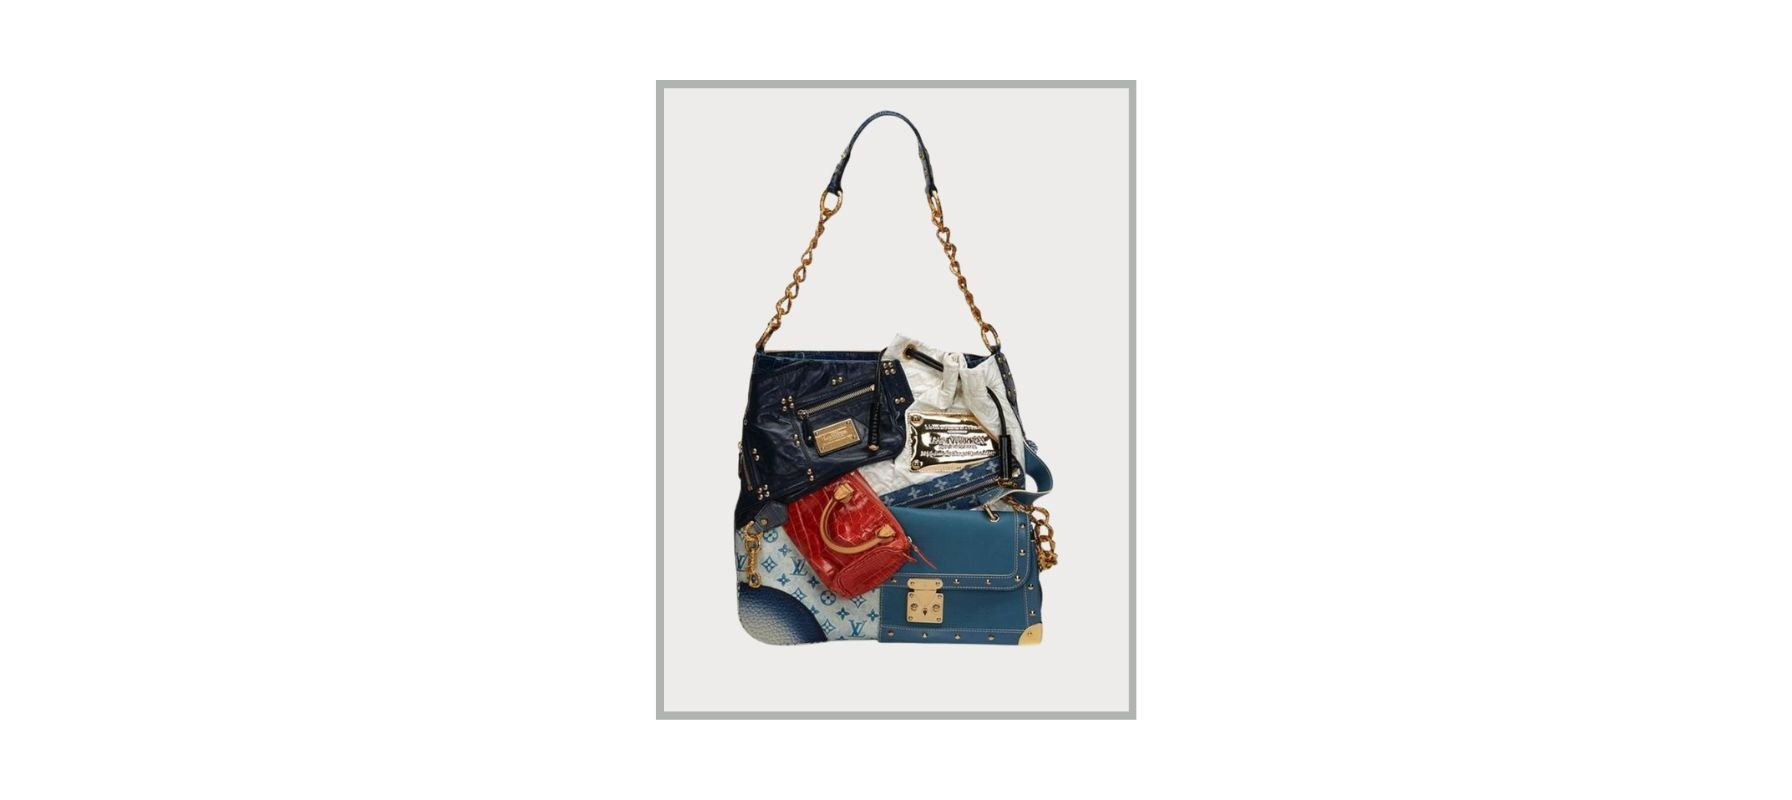 Handbags for Women | Women's Crossbody, Totes & Clutches | Aldo Shoes